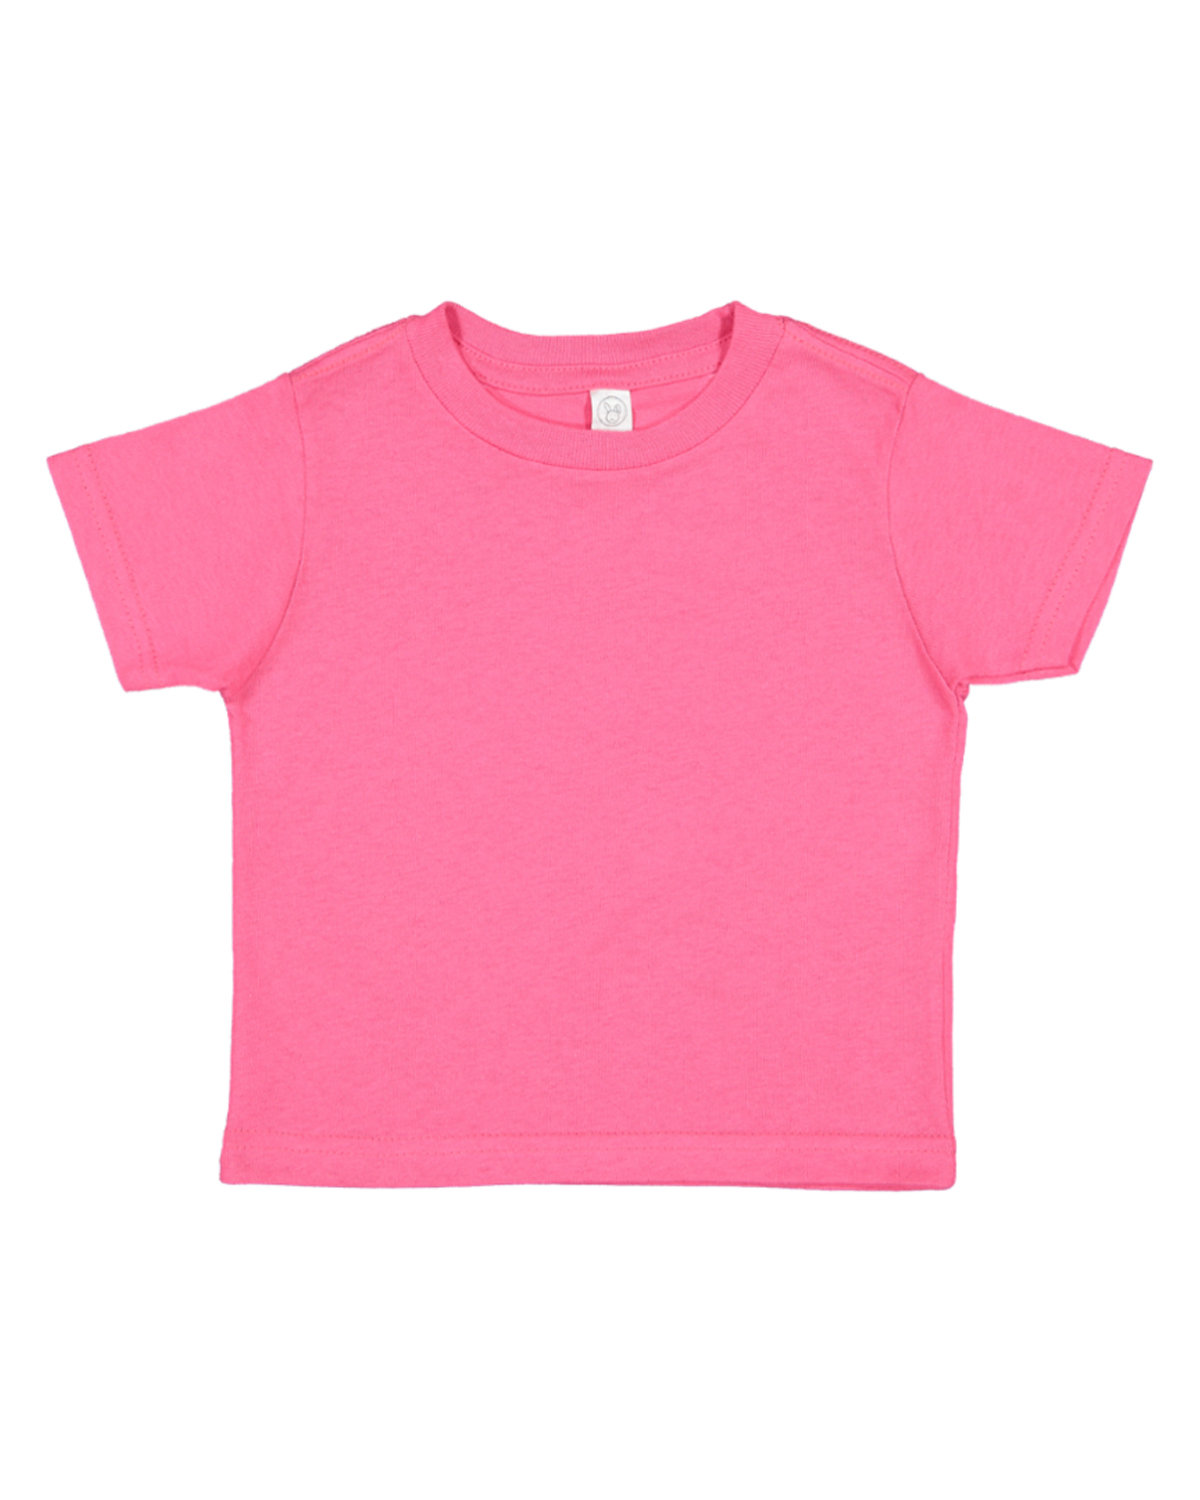 Rabbit Skins Toddler Fine Jersey T-Shirt HOT PINK 